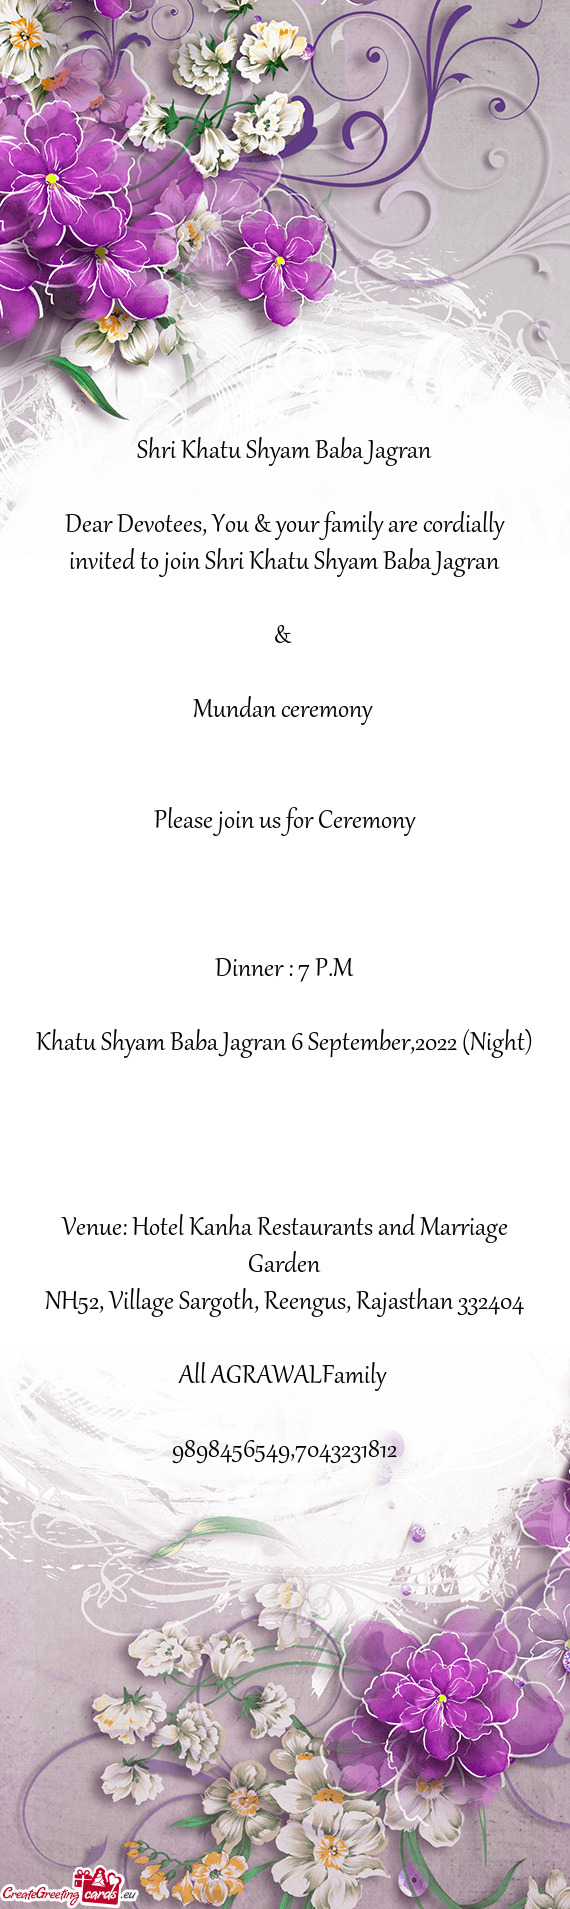 Khatu Shyam Baba Jagran 6 September,2022 (Night)